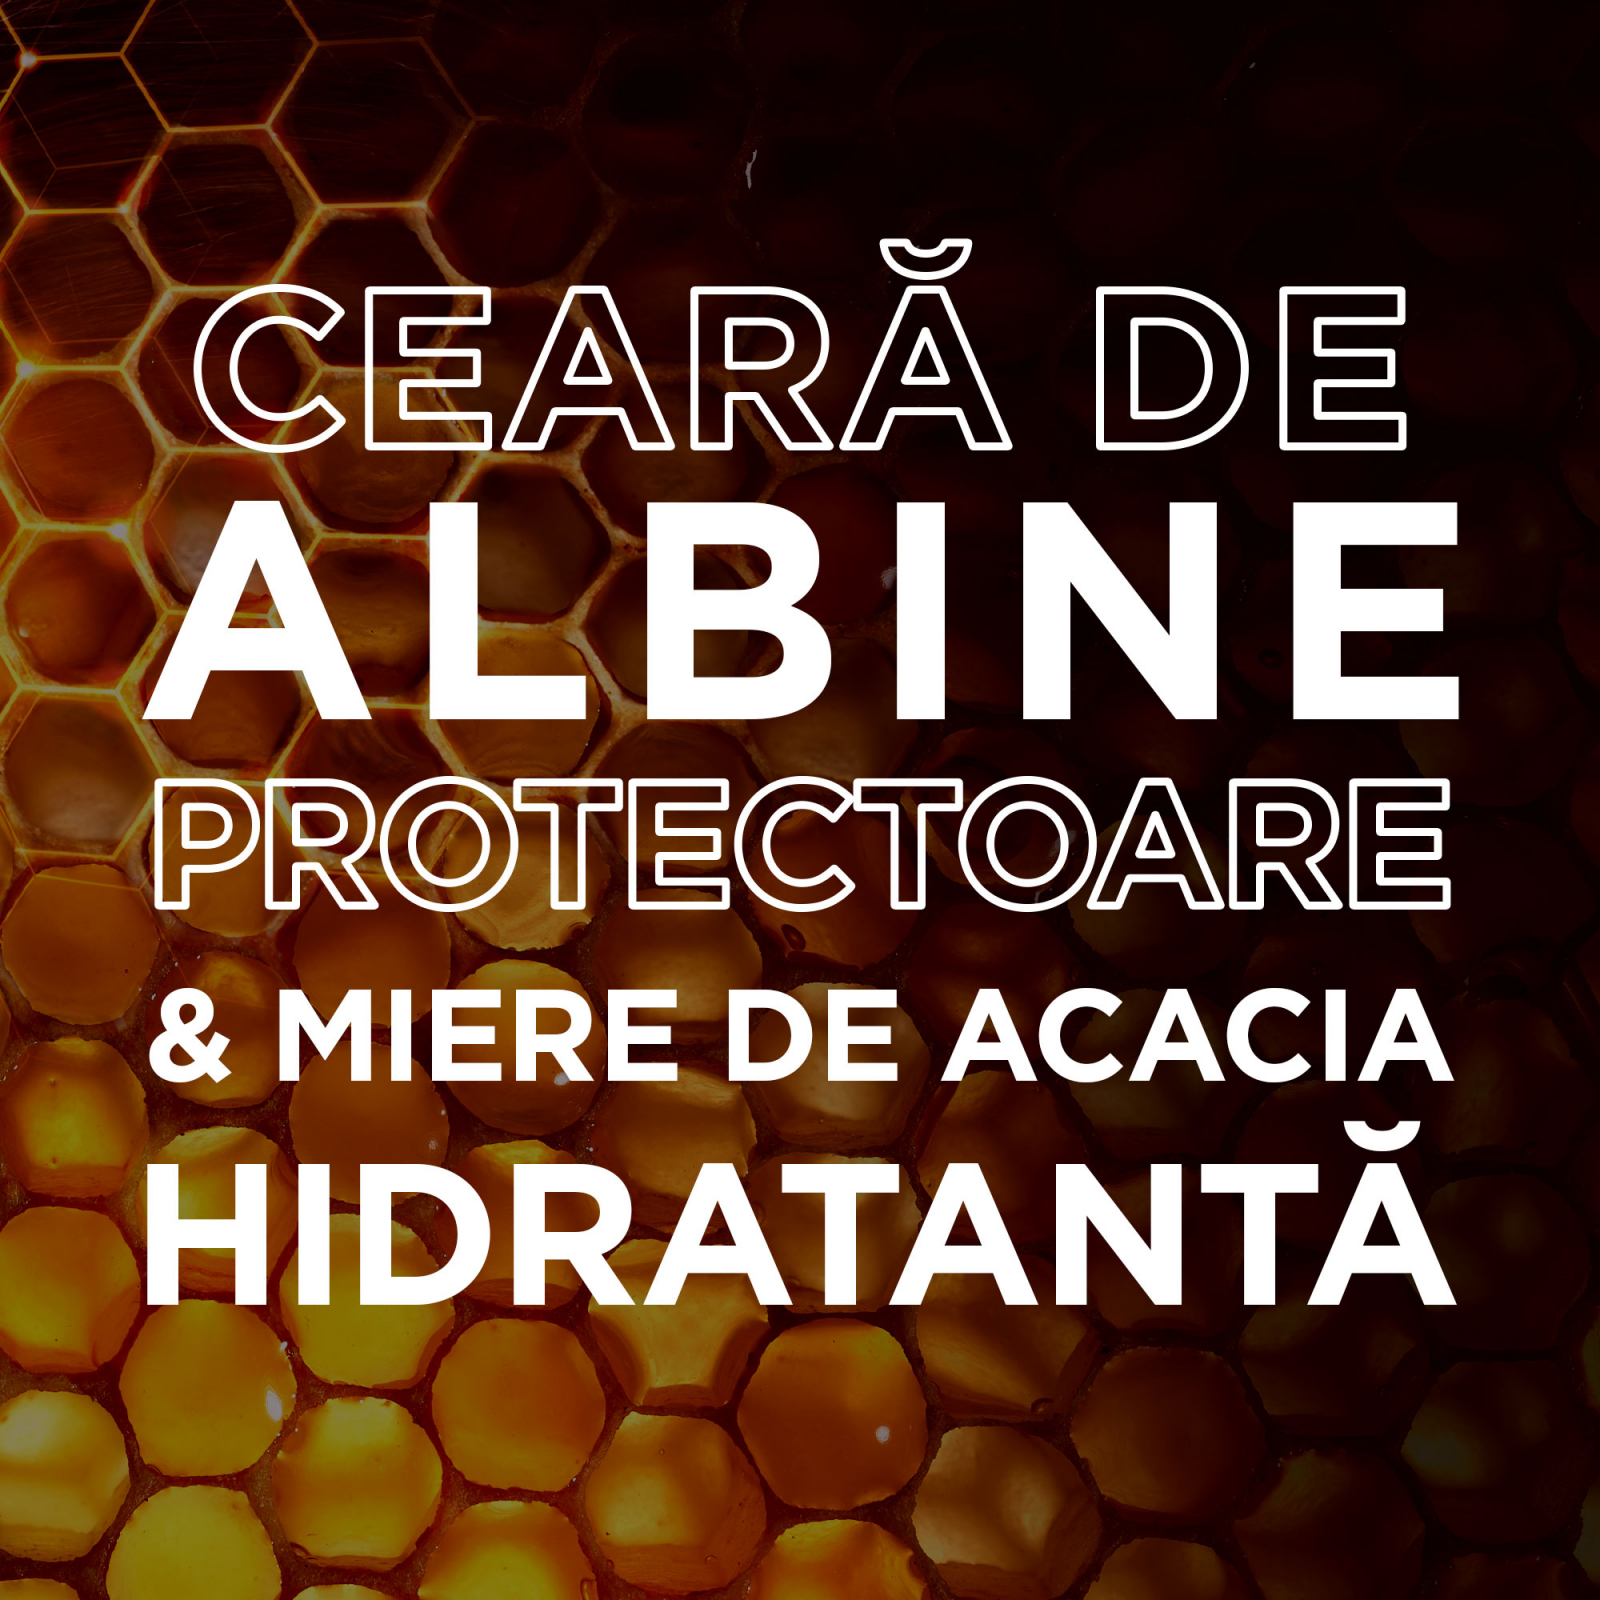 Masca reparatoare pentru par deteriorat Garnier Botanic Honey & Beeswax, 300 ml